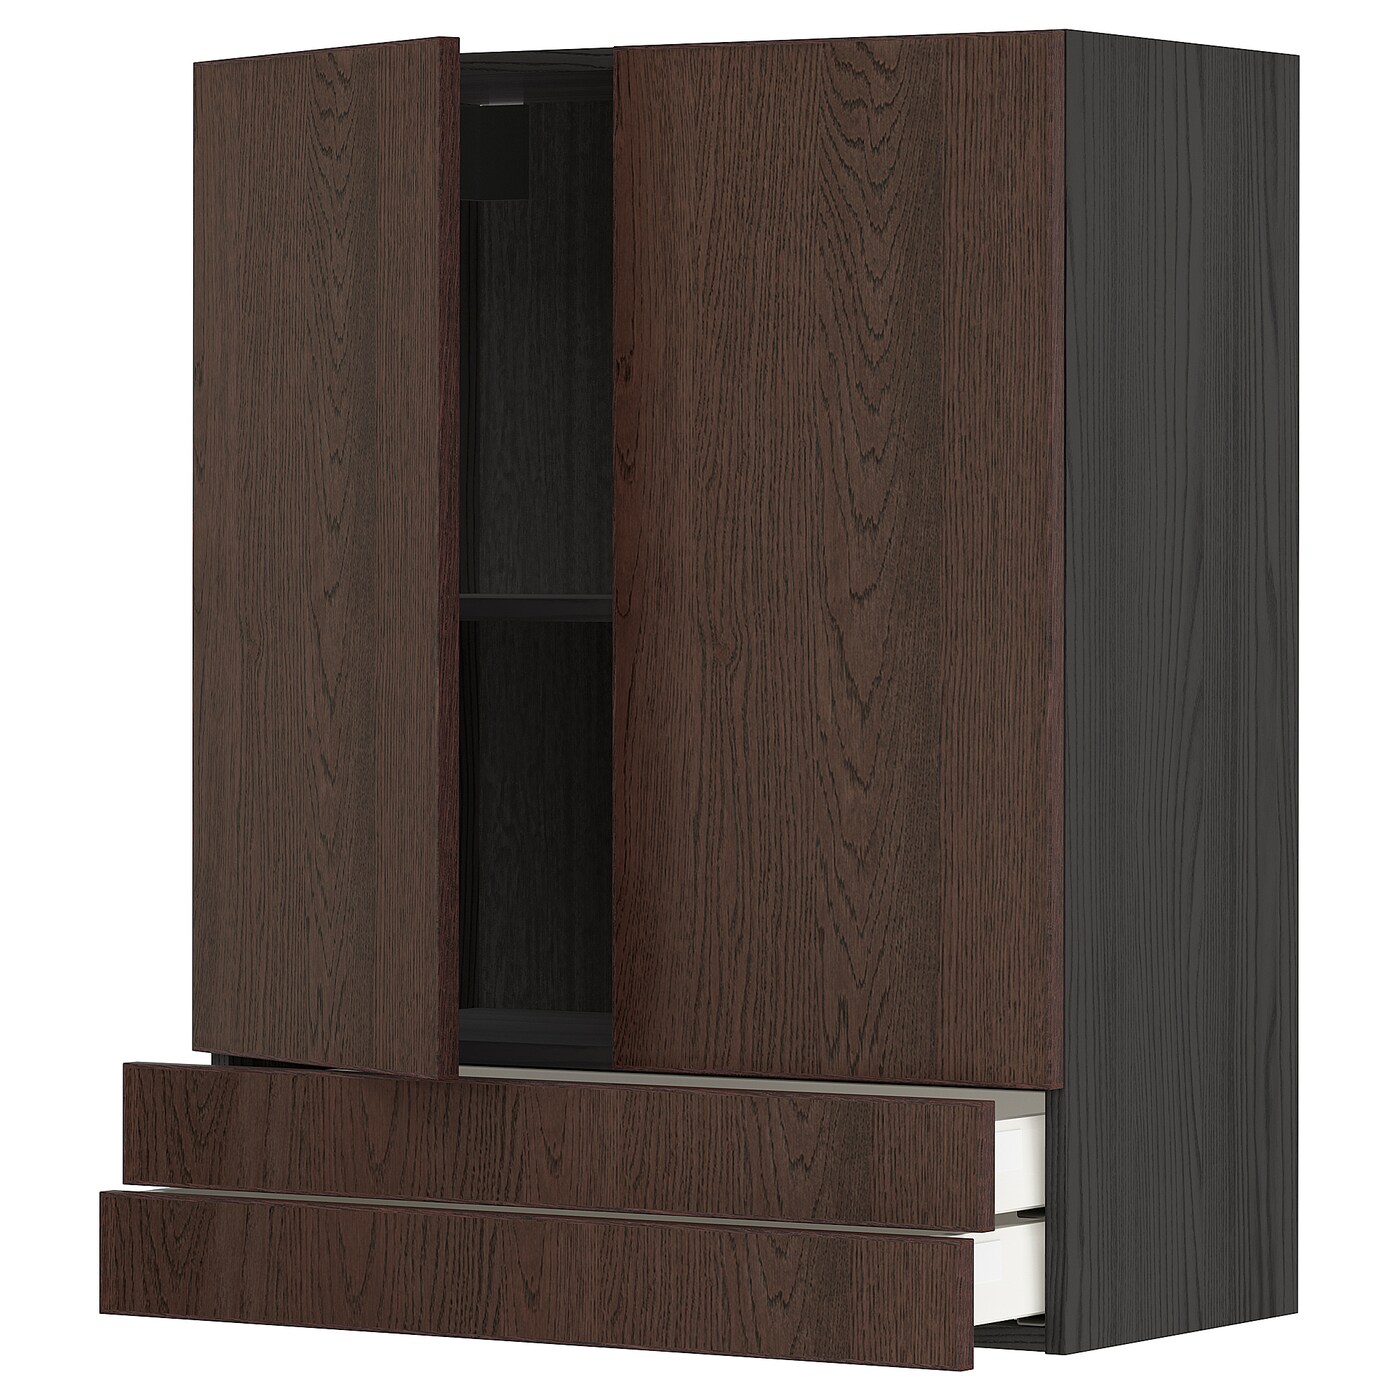 Шкаф  - METOD / MAXIMERA IKEA/  МЕТОД/МАКСИМЕРА ИКЕА, 100х80 см, коричневый/черный